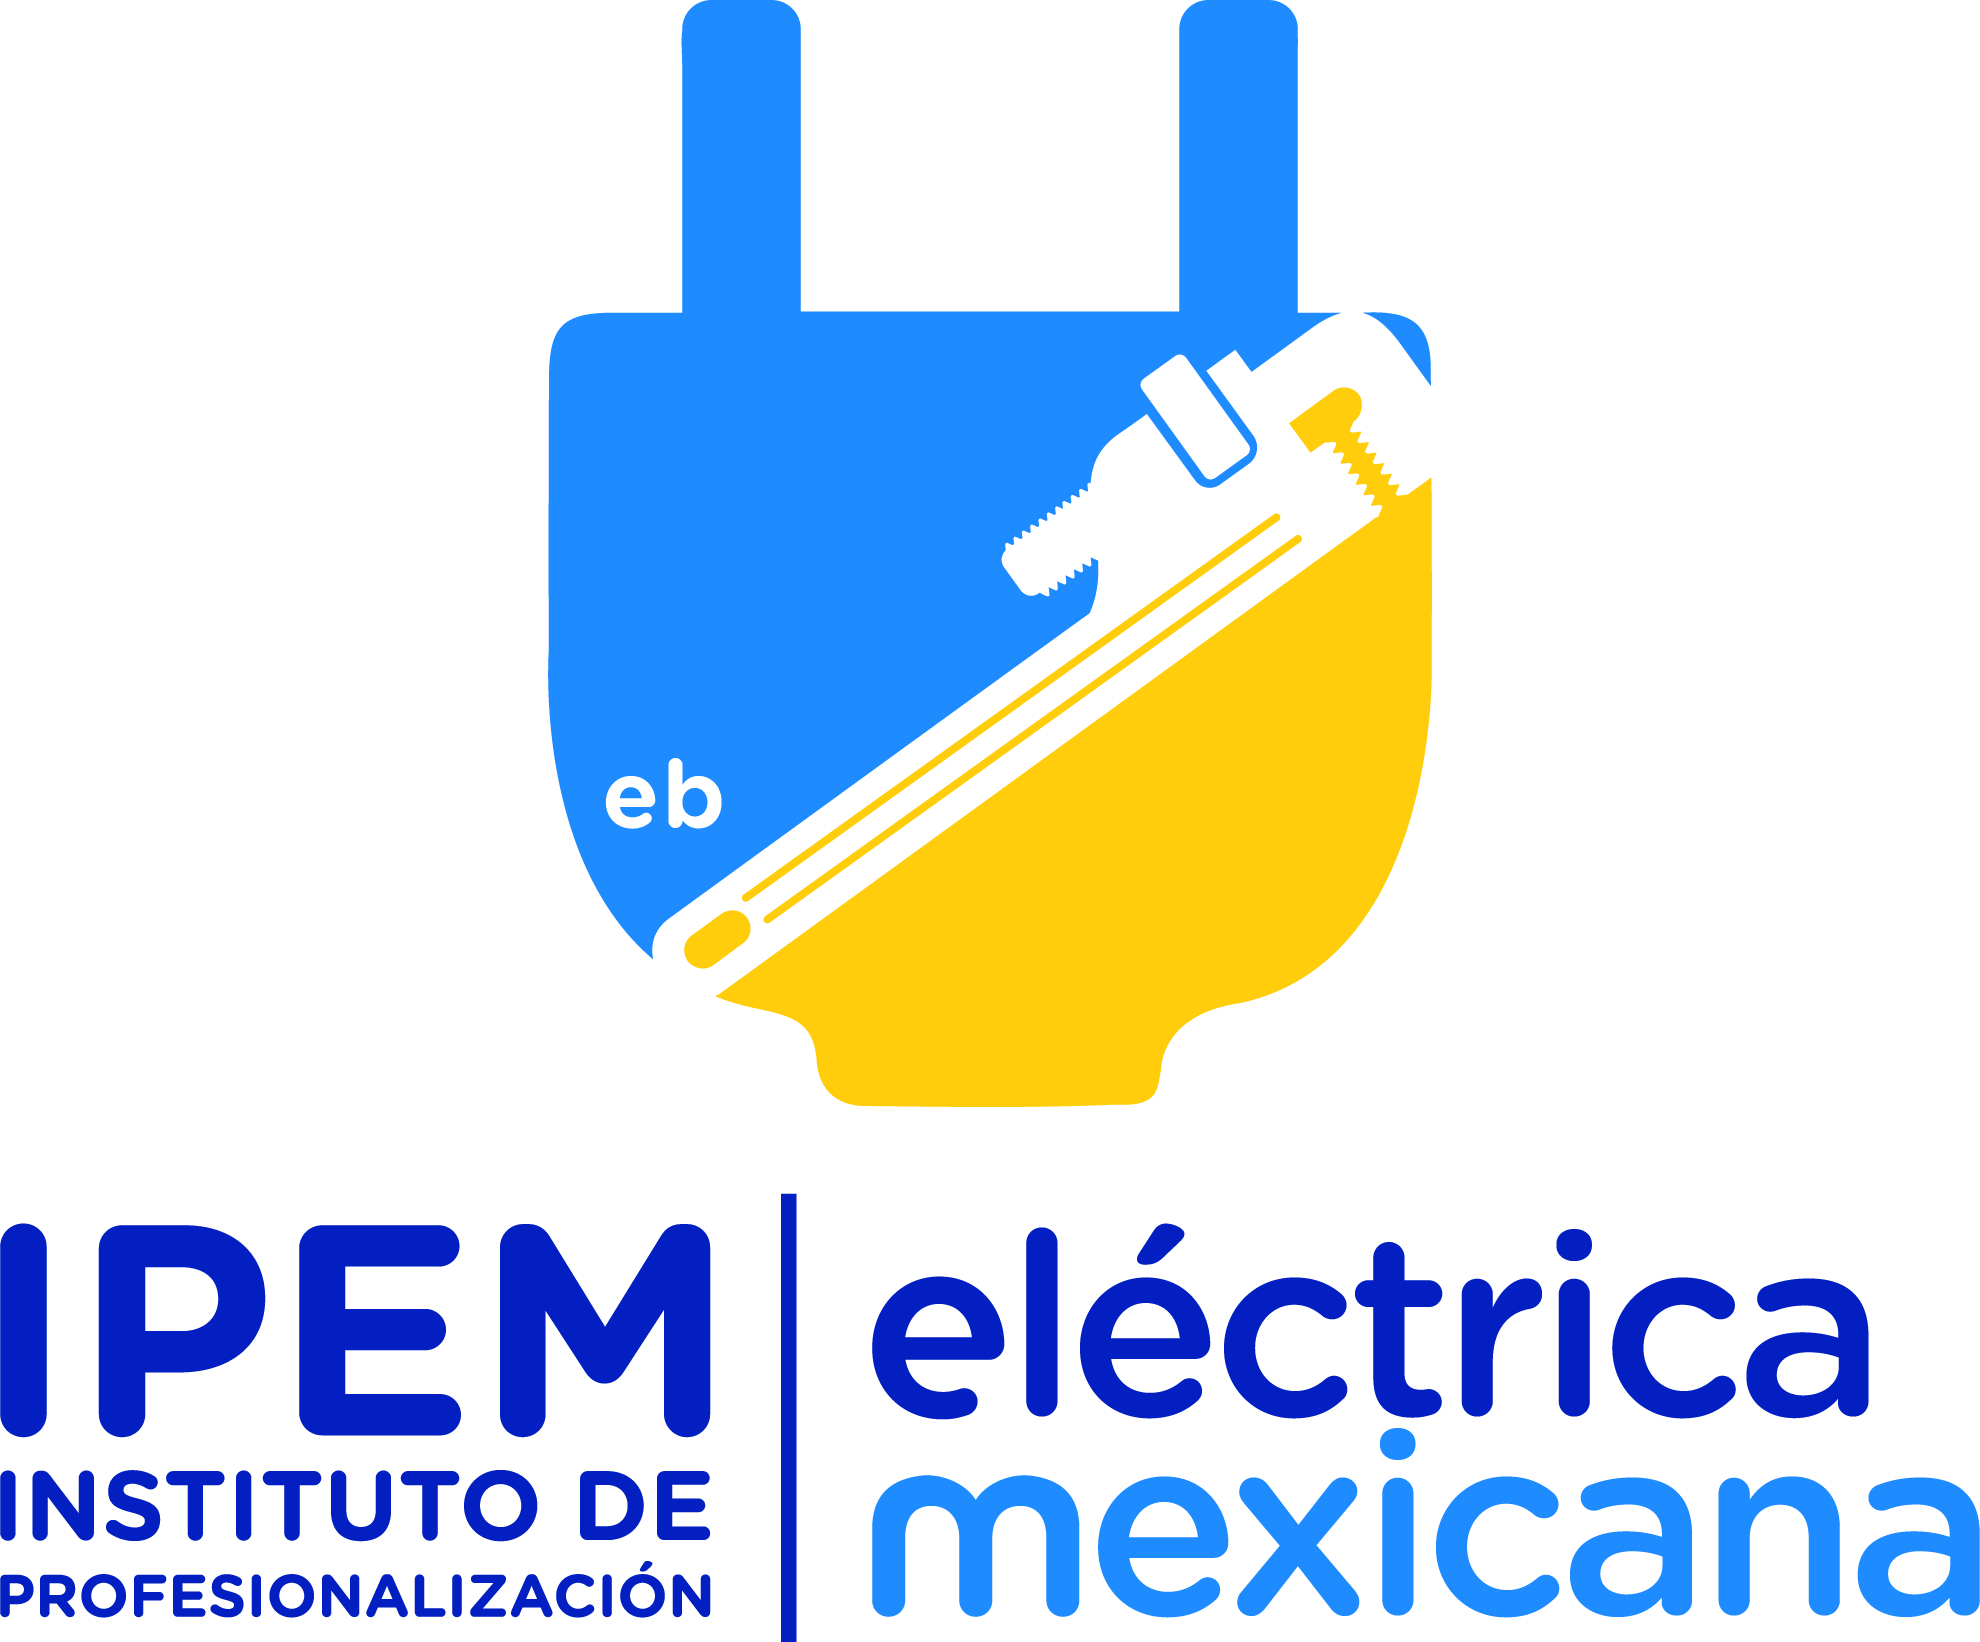 Instituto de Profesionalización Eléctrica Mexicana